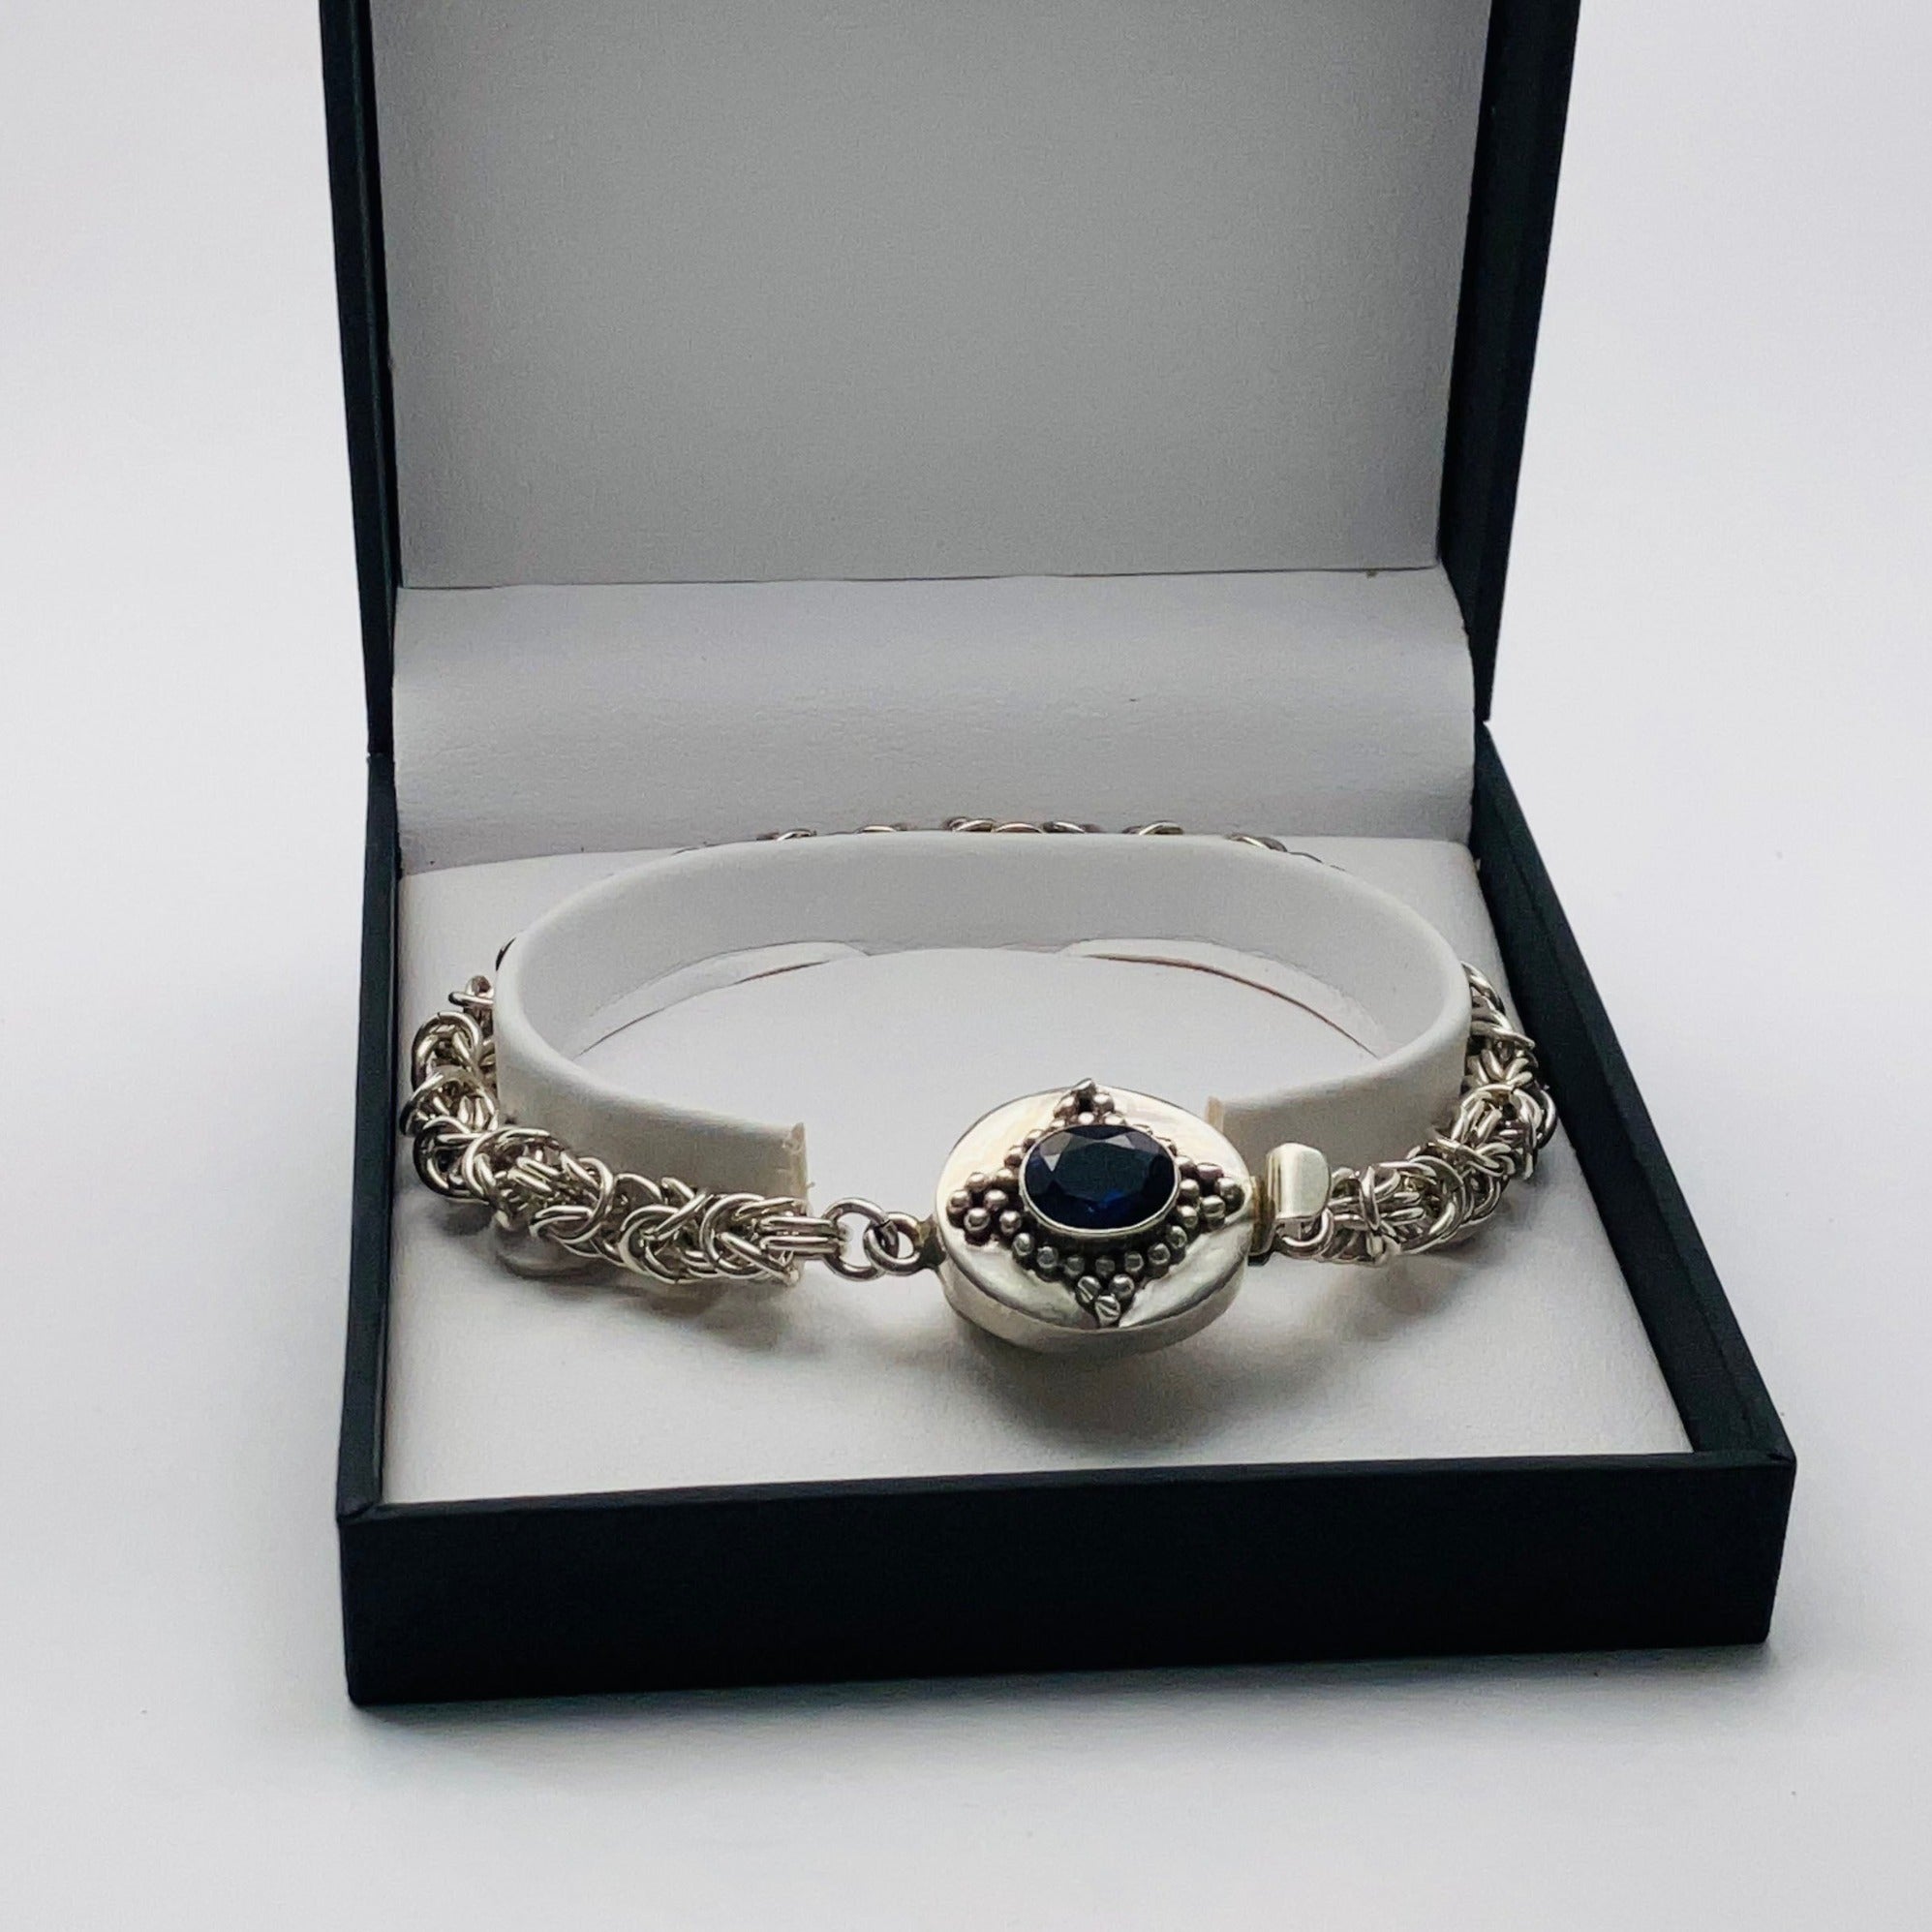 Sterling Silver bracelet handmade by Laura Haszard